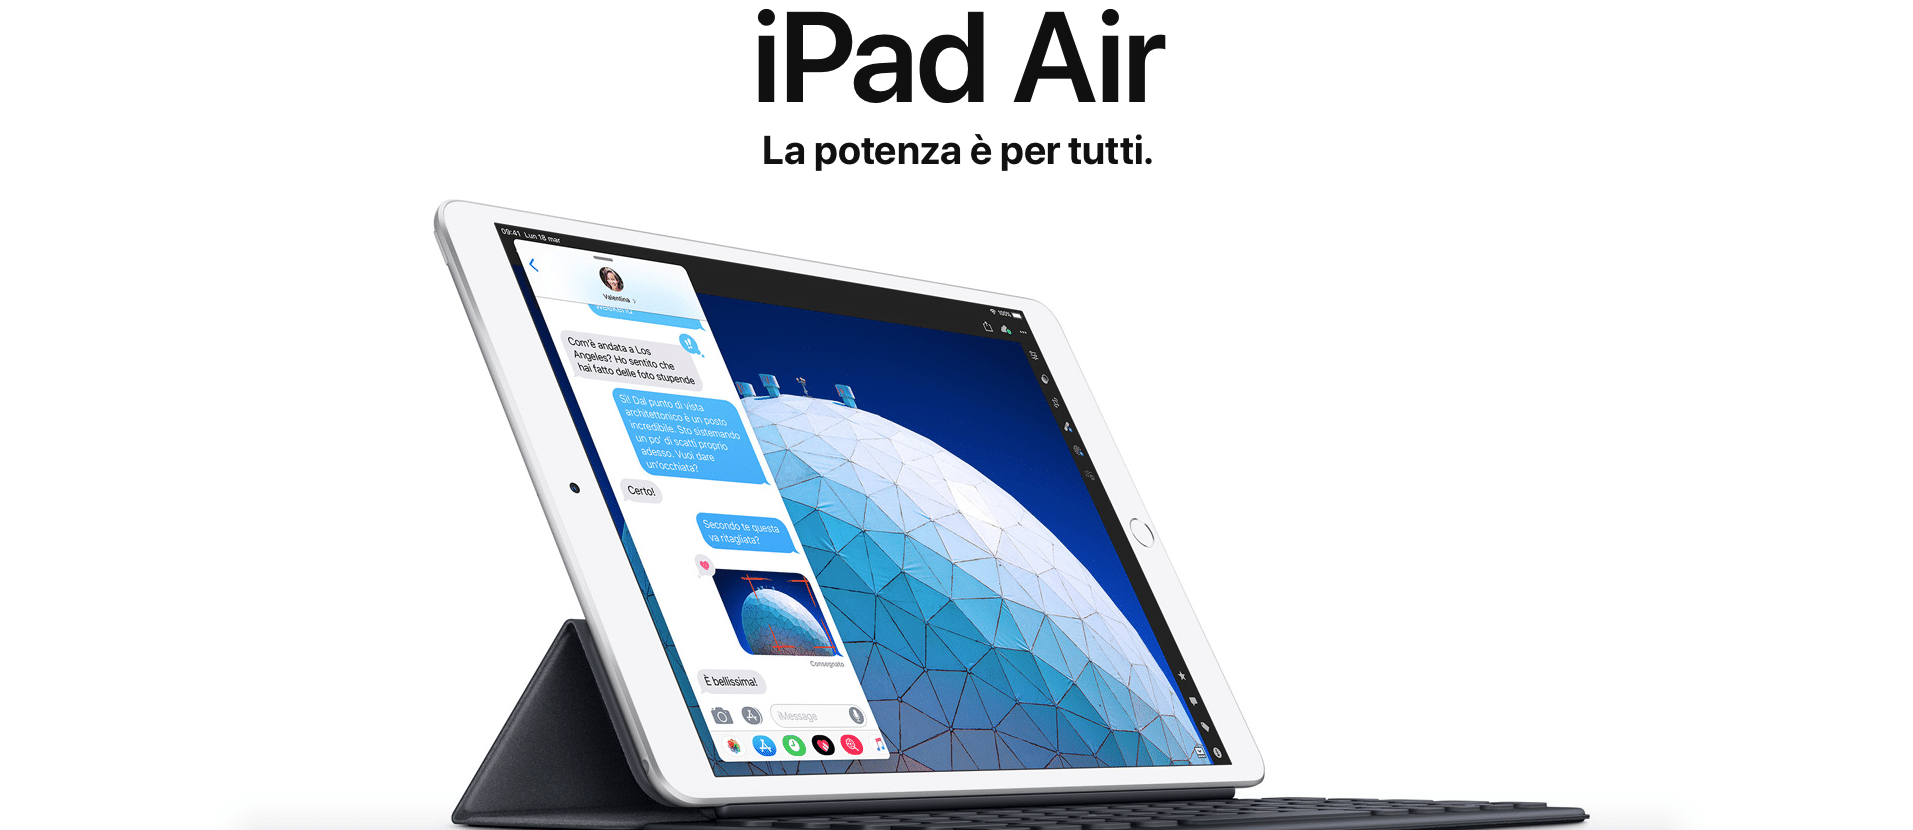 iPad Air 2019, iPad mini 5, Potenza, iPhone XR